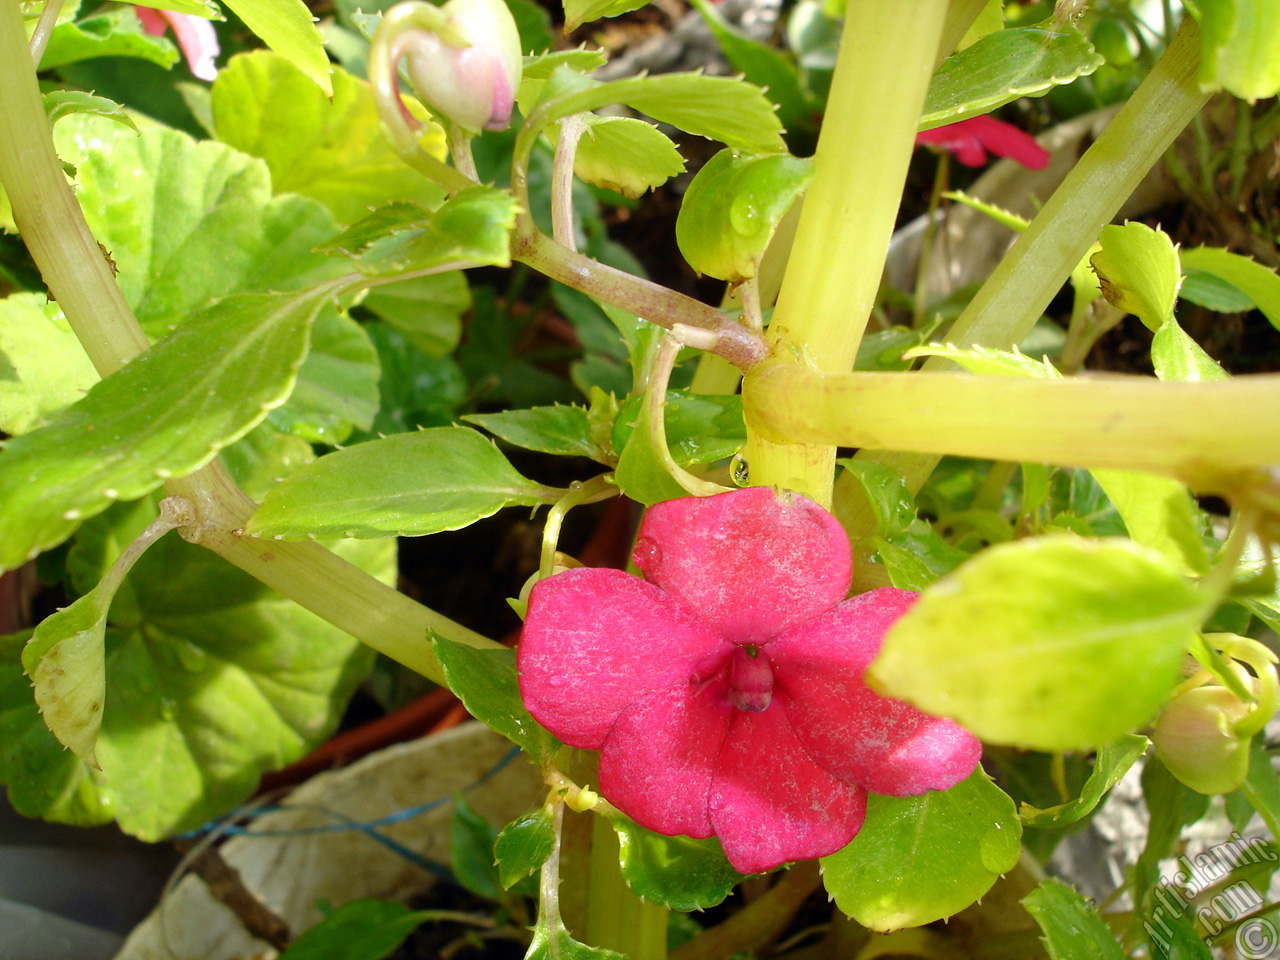 Garden Balsam, -Touch-me-not, Jewel Weed- flower.
